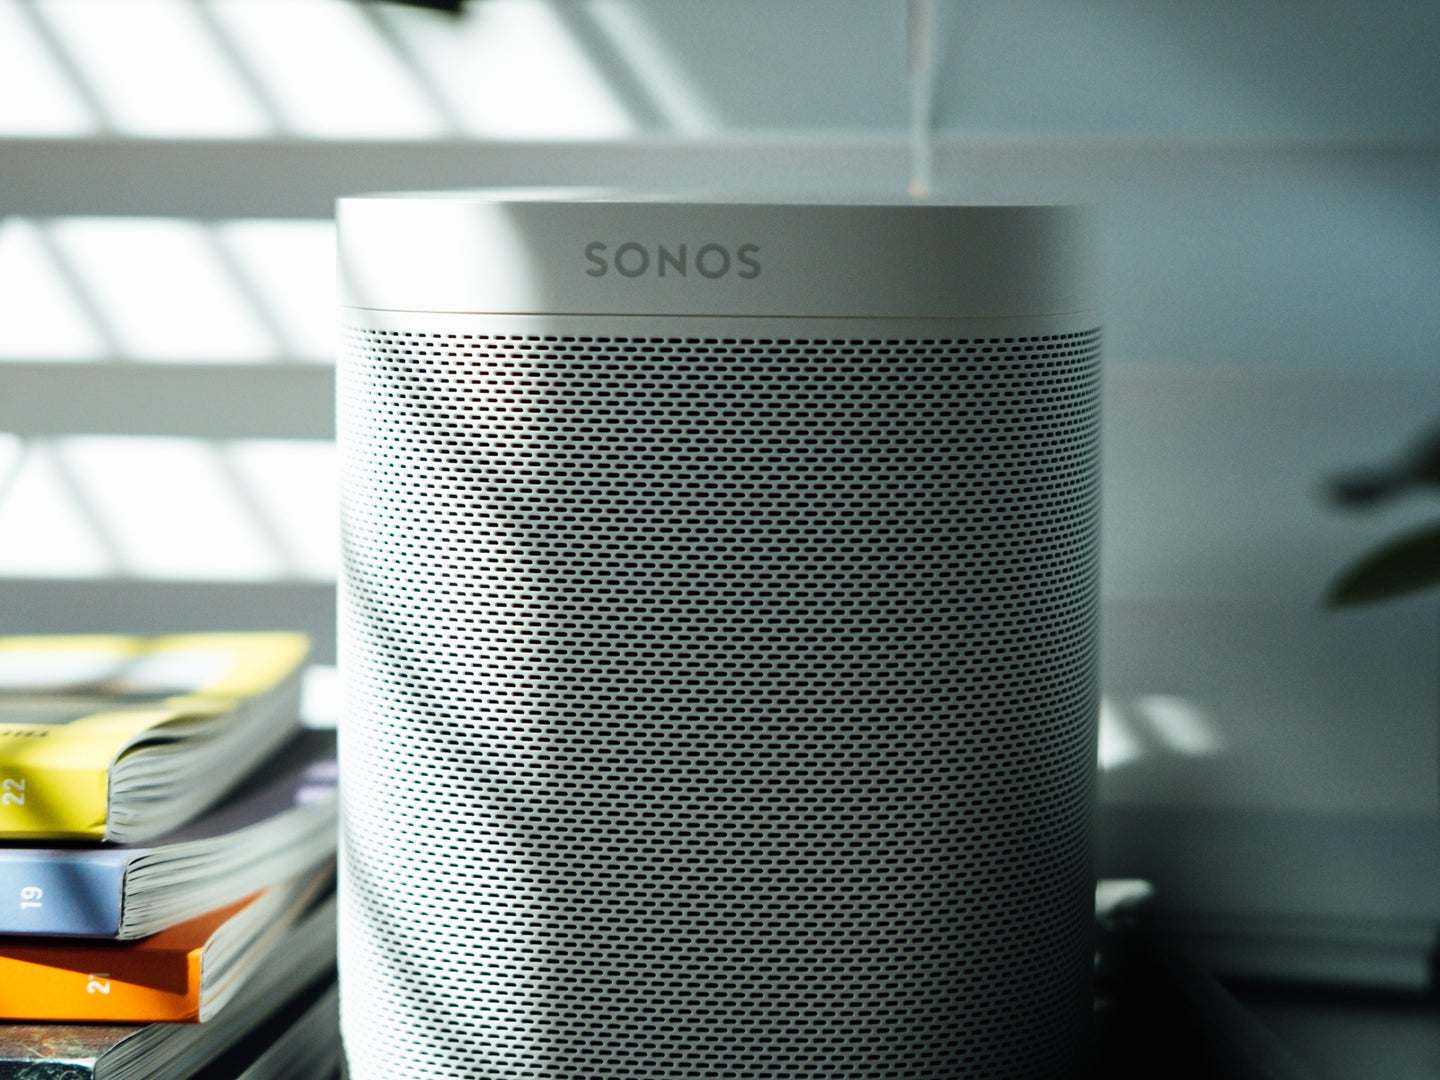 Sonos speaker on a desk